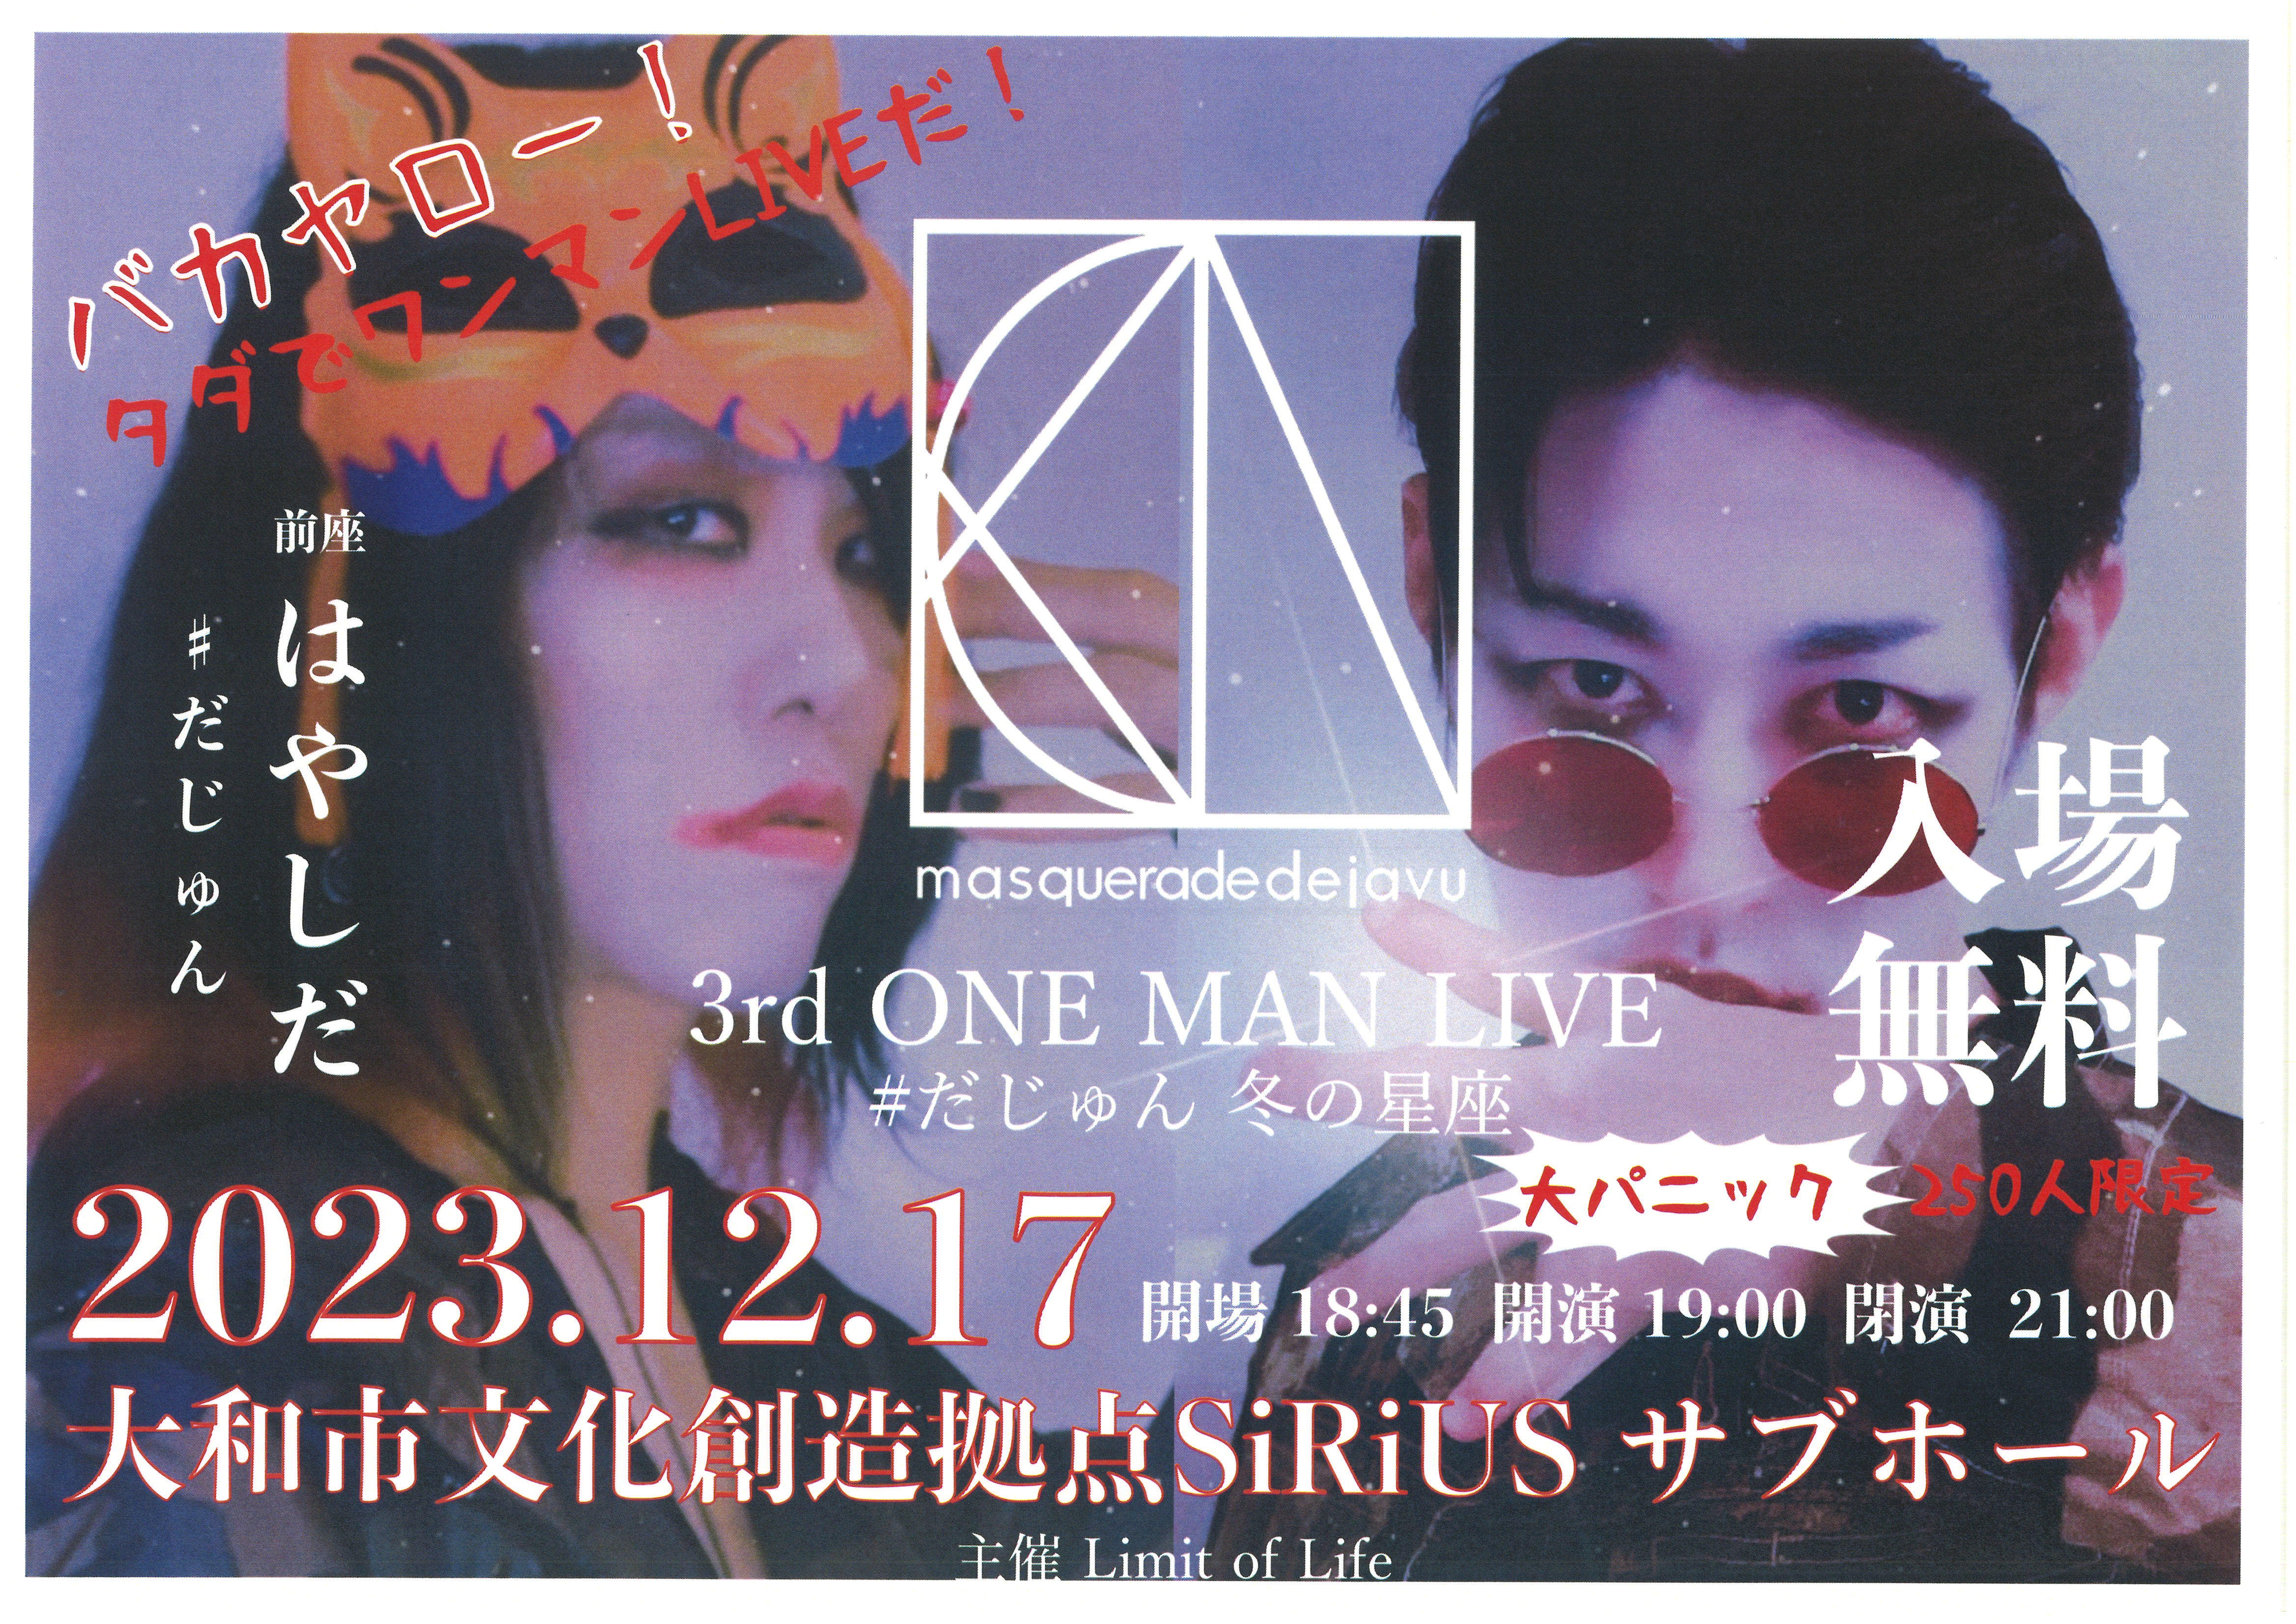 masqueradedejavu 3rd ONE MAN LIVE 〜冬の星座〜